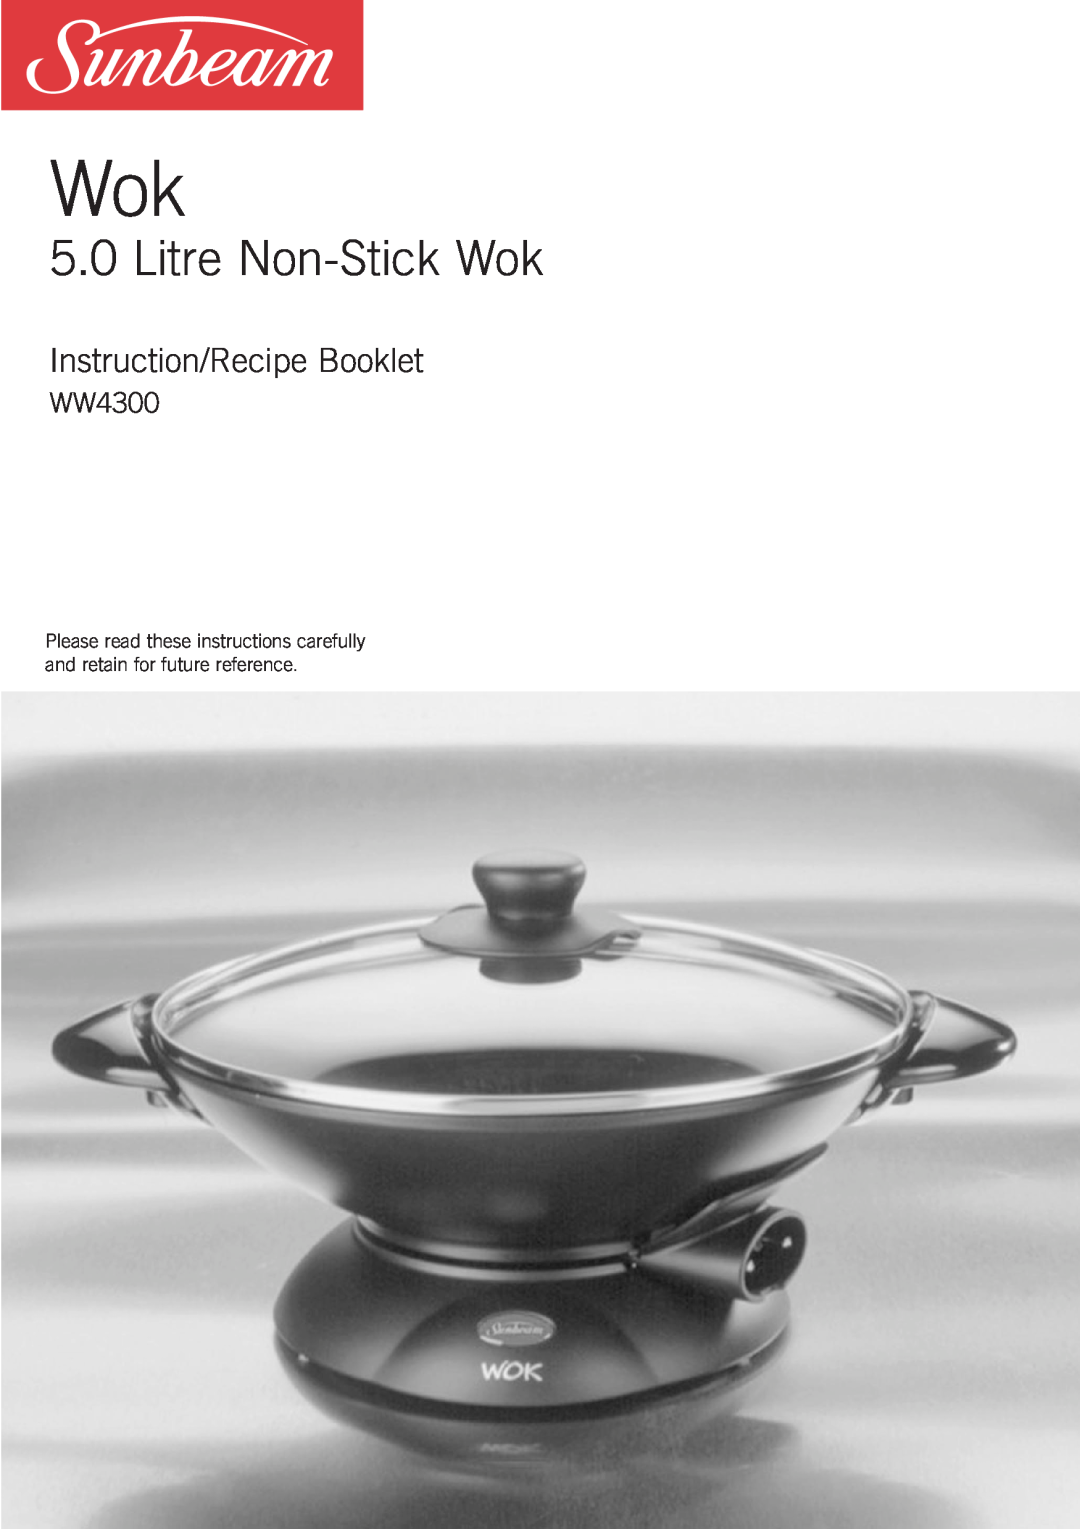 Sunbeam WW4300 manual Litre Non-StickWok, Instruction/Recipe Booklet 